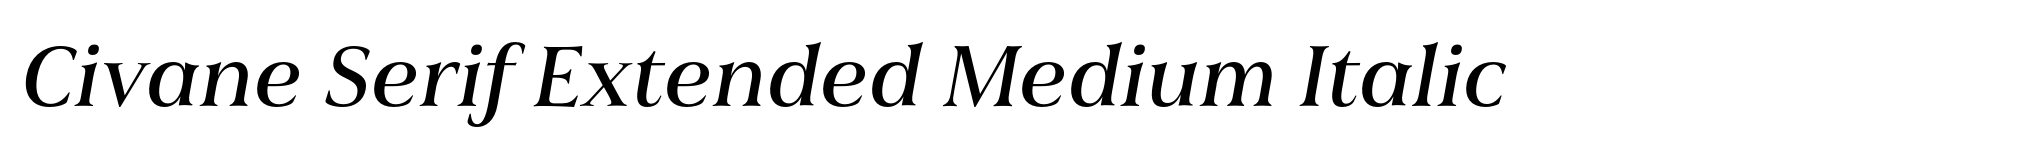 Civane Serif Extended Medium Italic image